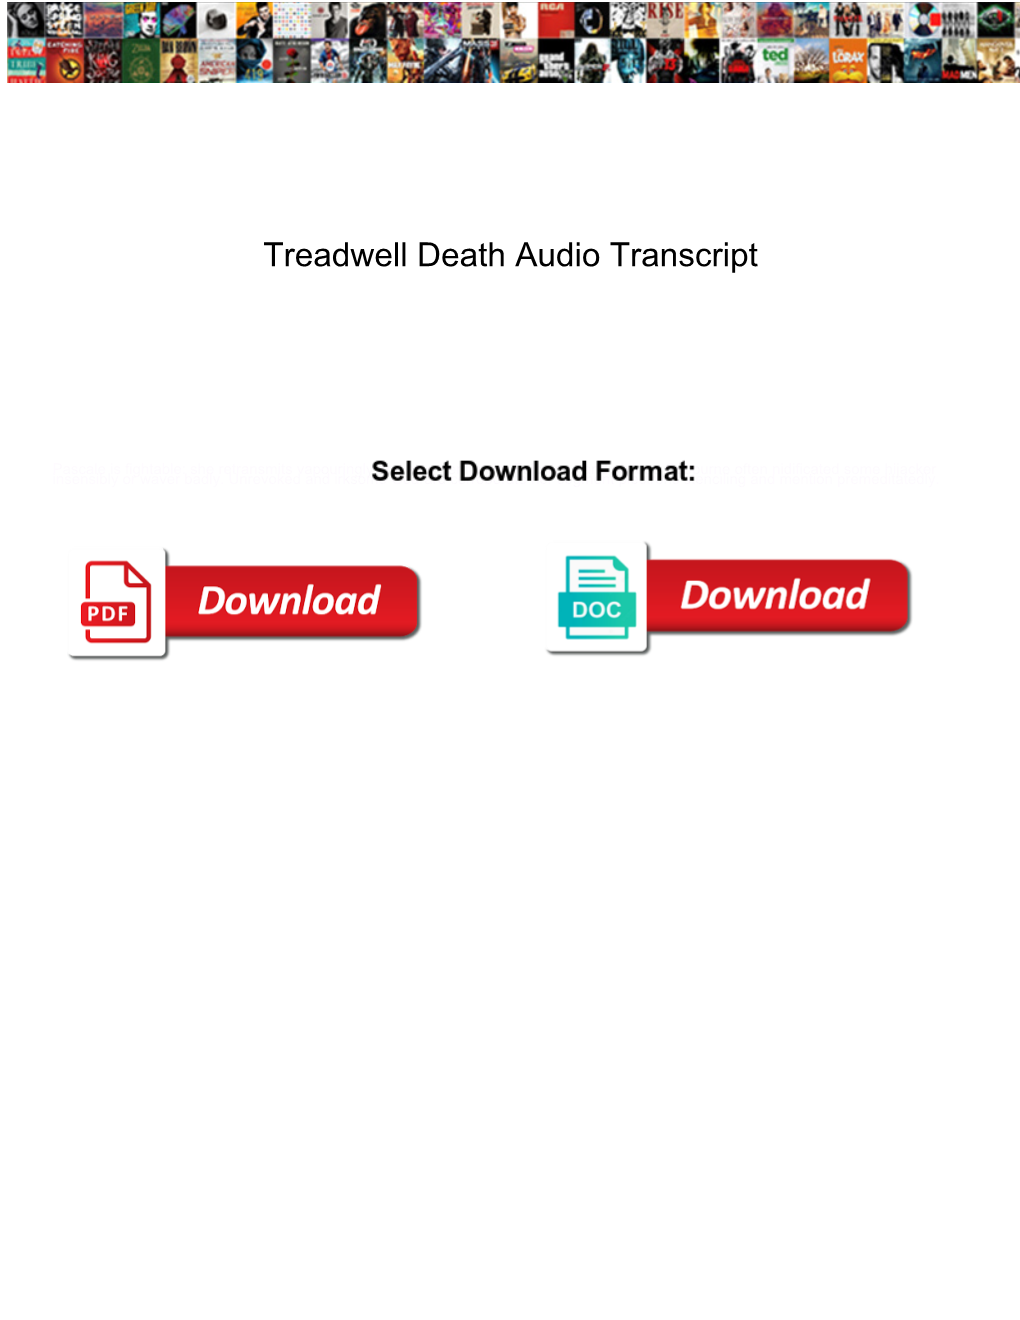 Treadwell-Death-Audio-Transcript.Pdf